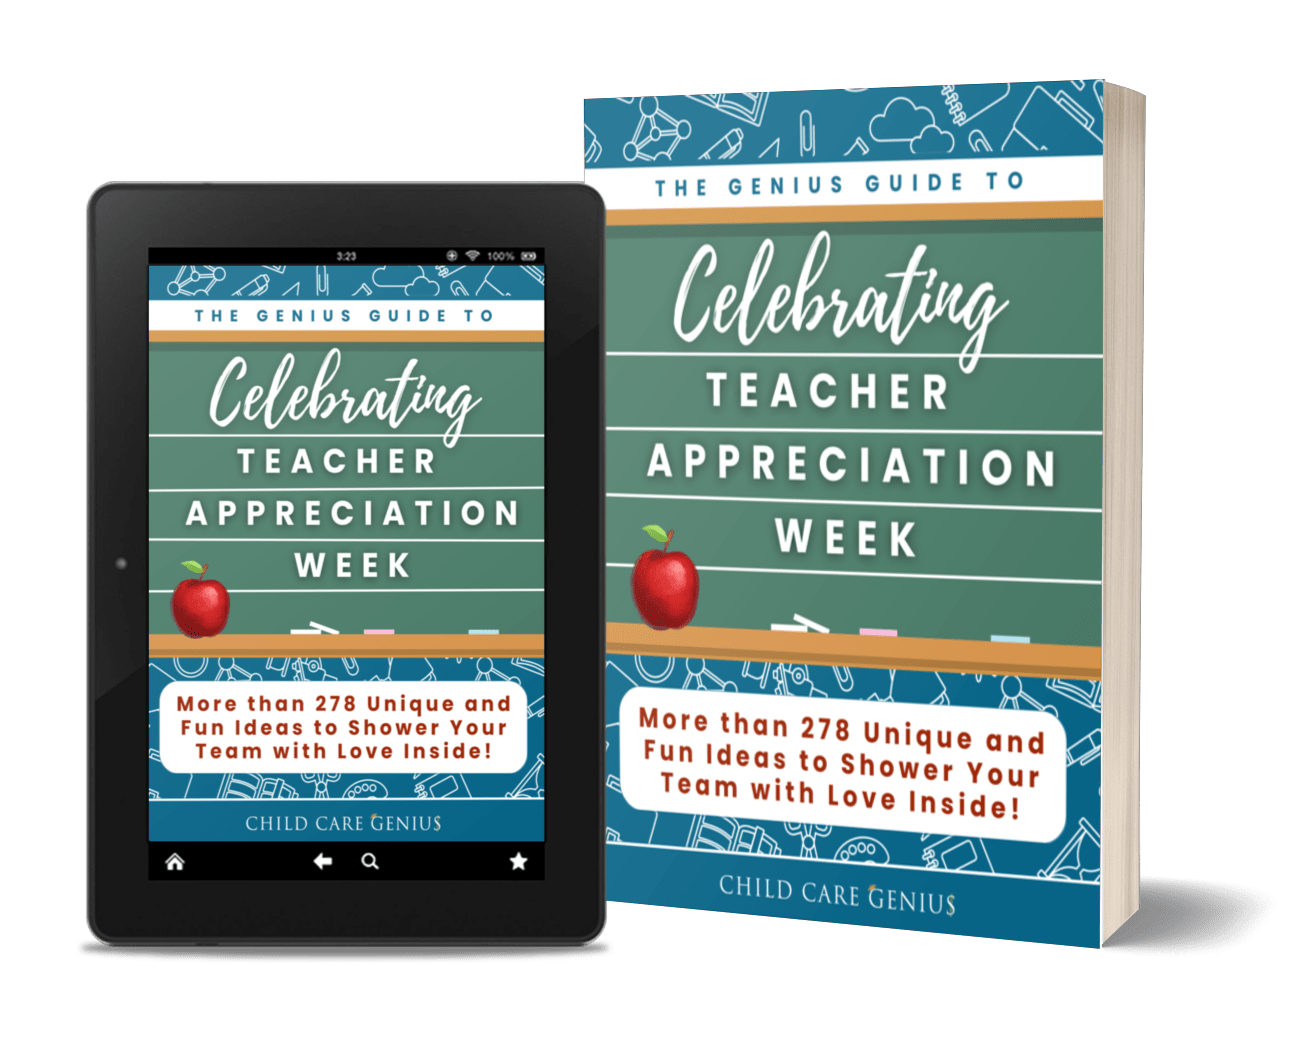 The Genius Guide to Celebrating Teacher Appreciation Week